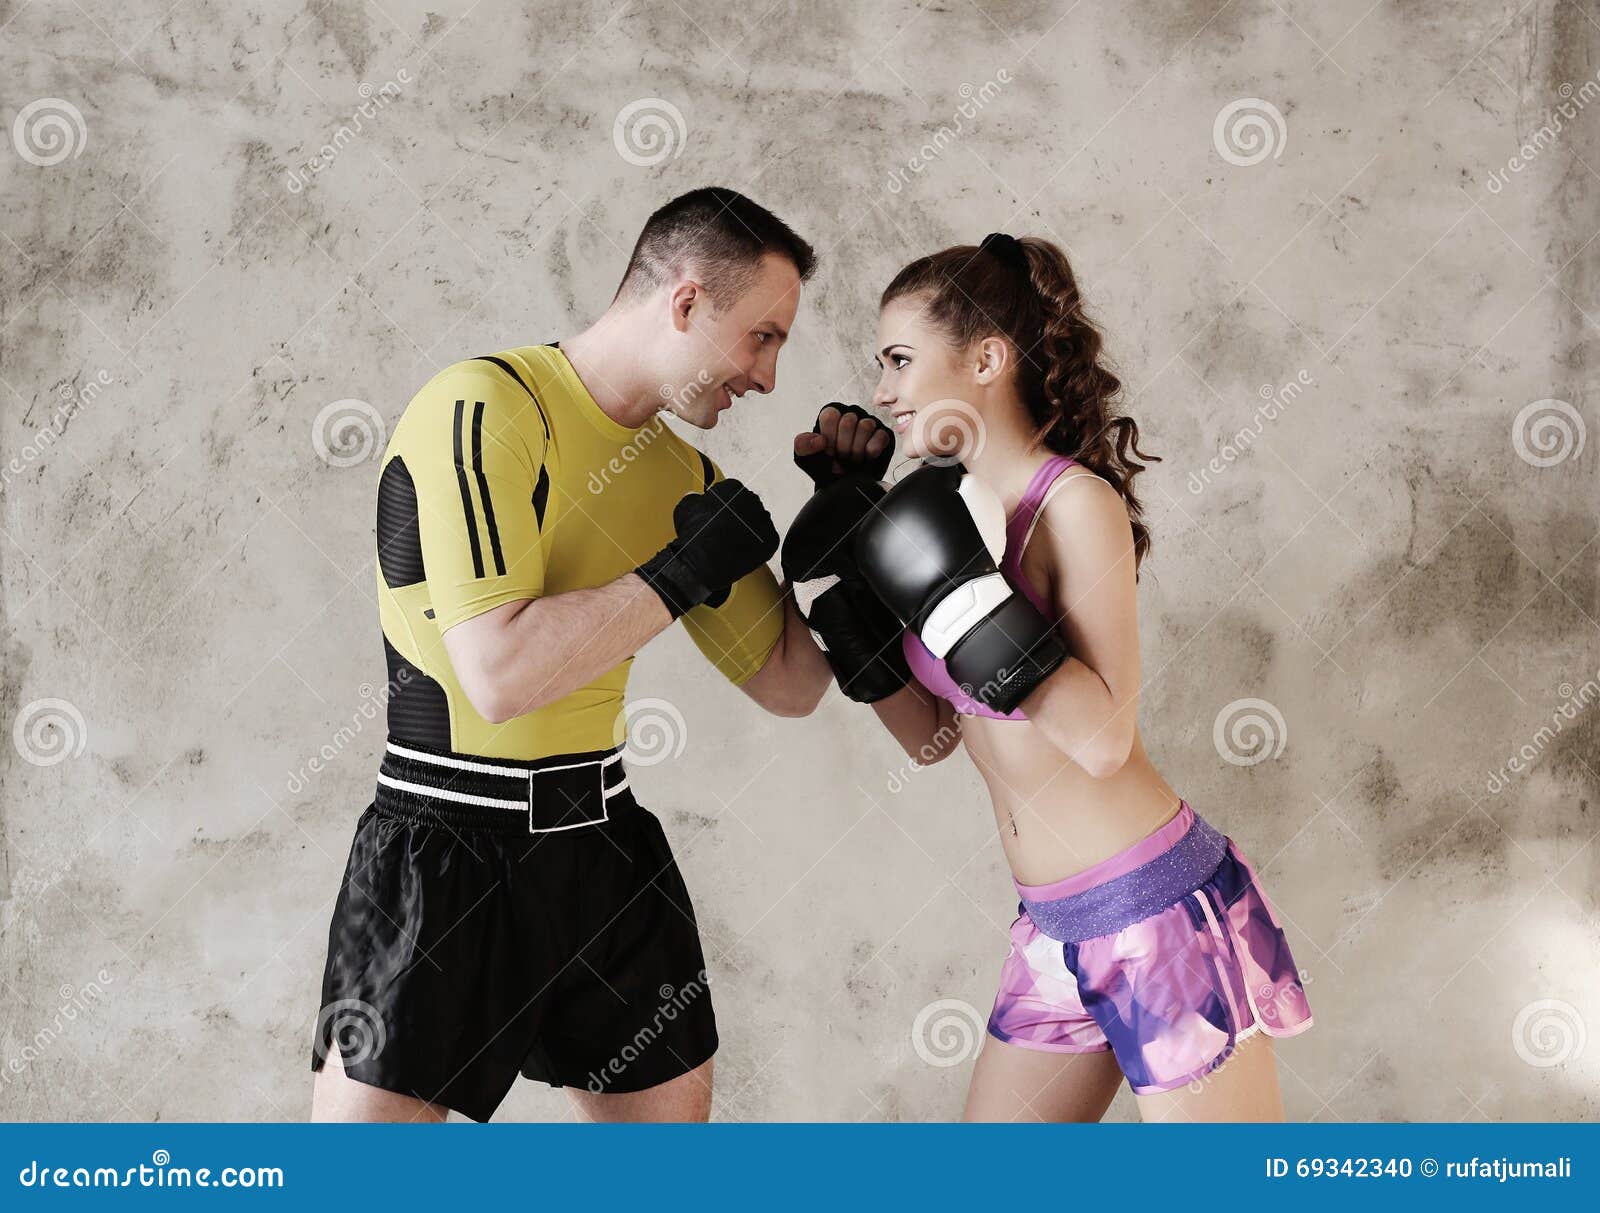 He love sport. Пара боксеров. Фотосессия бокс парочки. Боксерская фотосессия пары. Фотосессия в стиле бокс для пары.